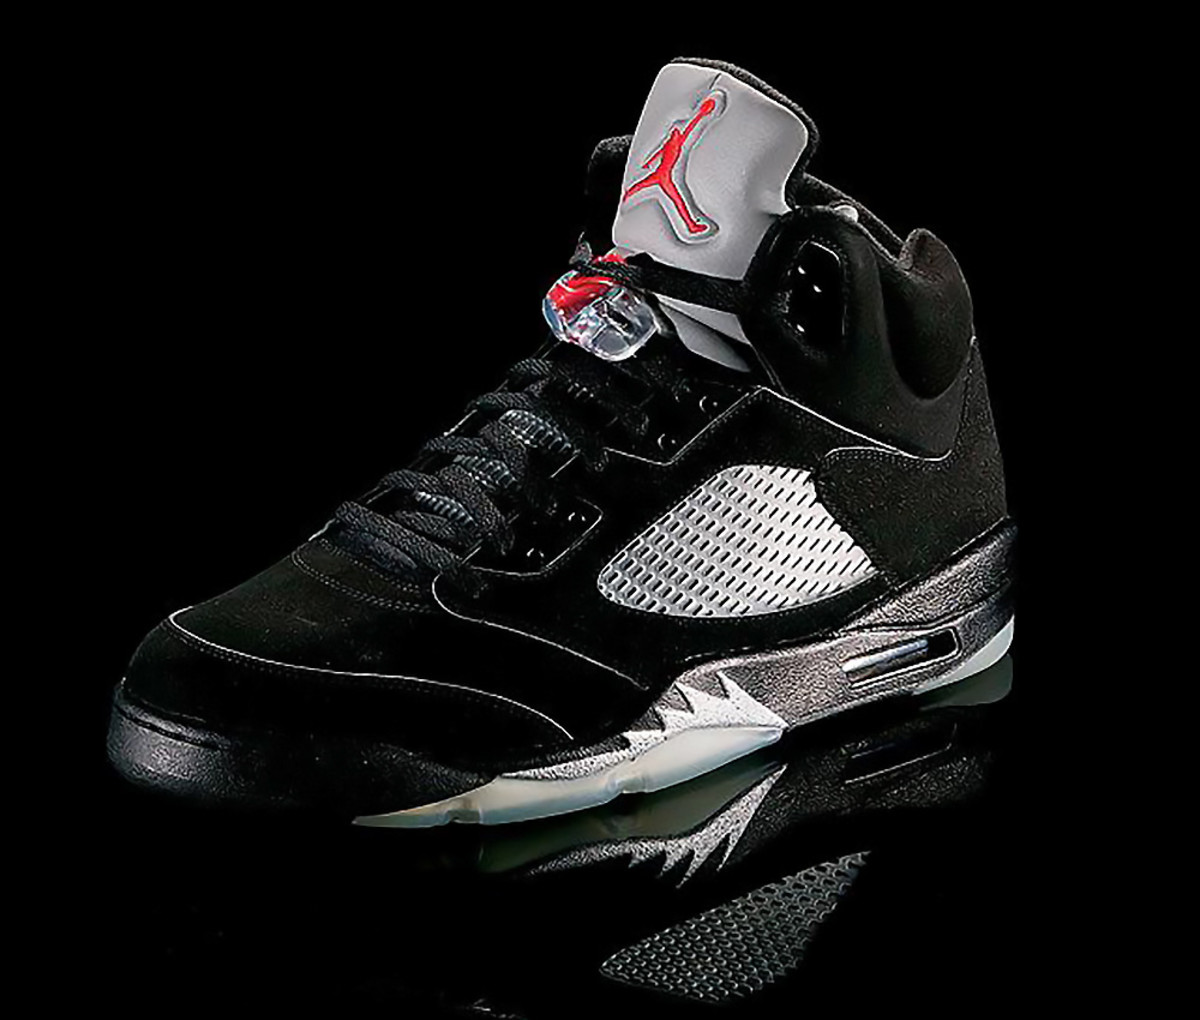 Ranking all 33 Air Jordan sneakers - Sports Illustrated